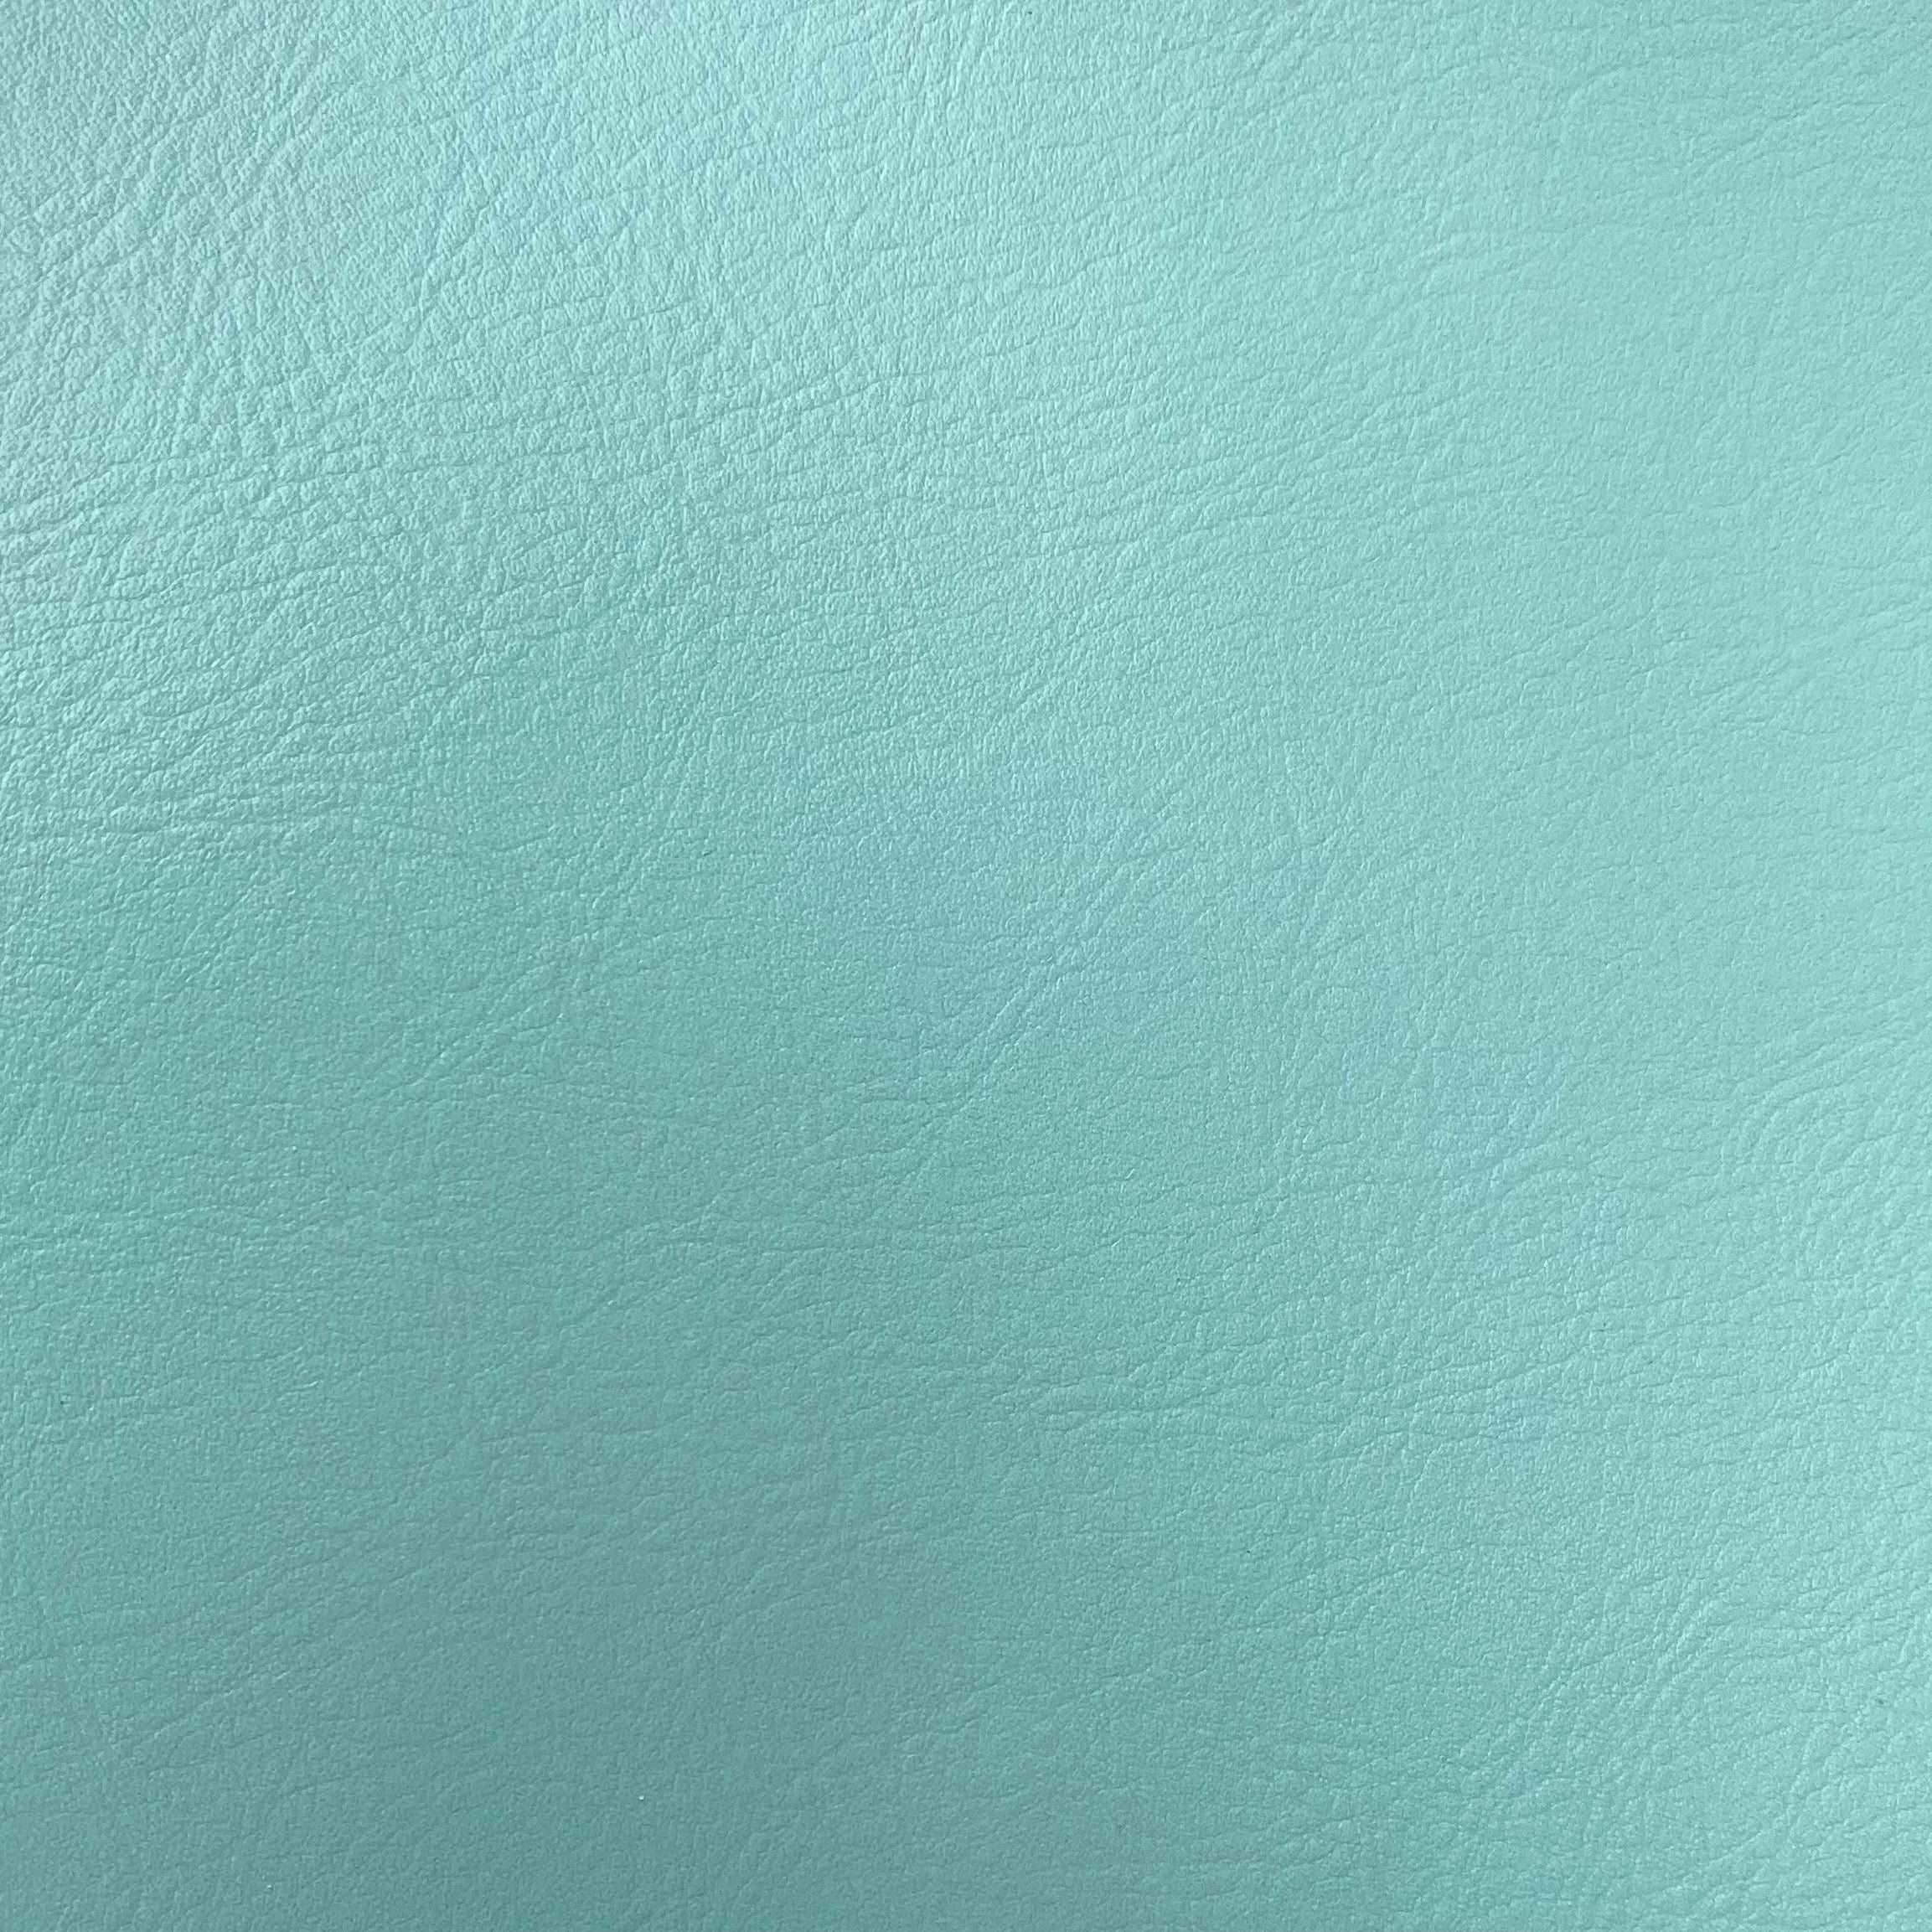 Bentwood Upholstery Vinyl: Mint Green